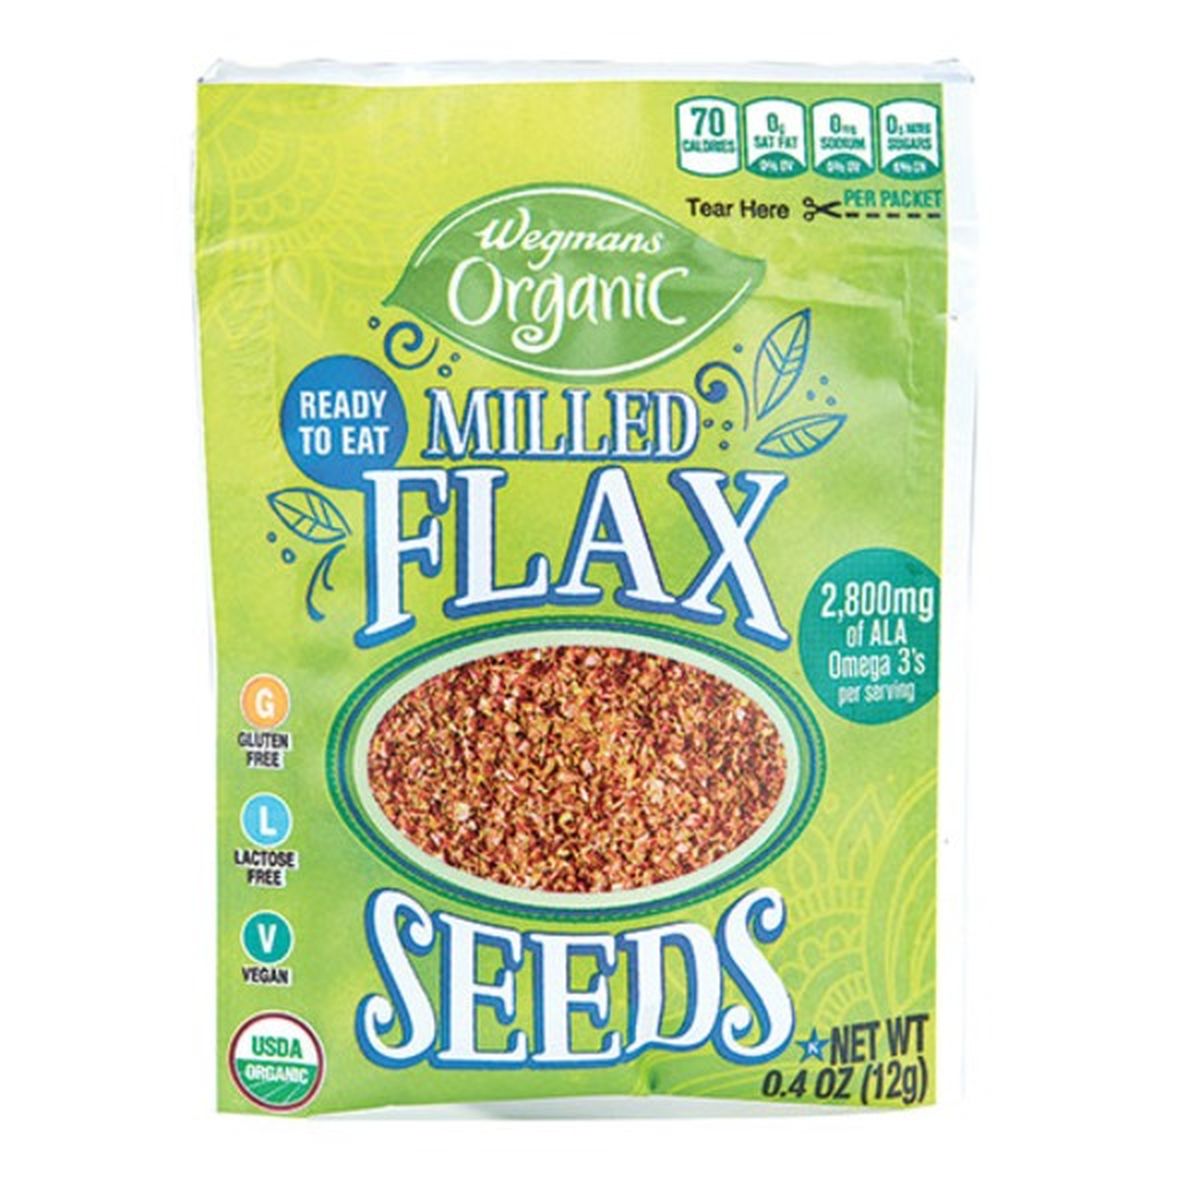 Calories in Wegmans Organic Milled Flax Seeds